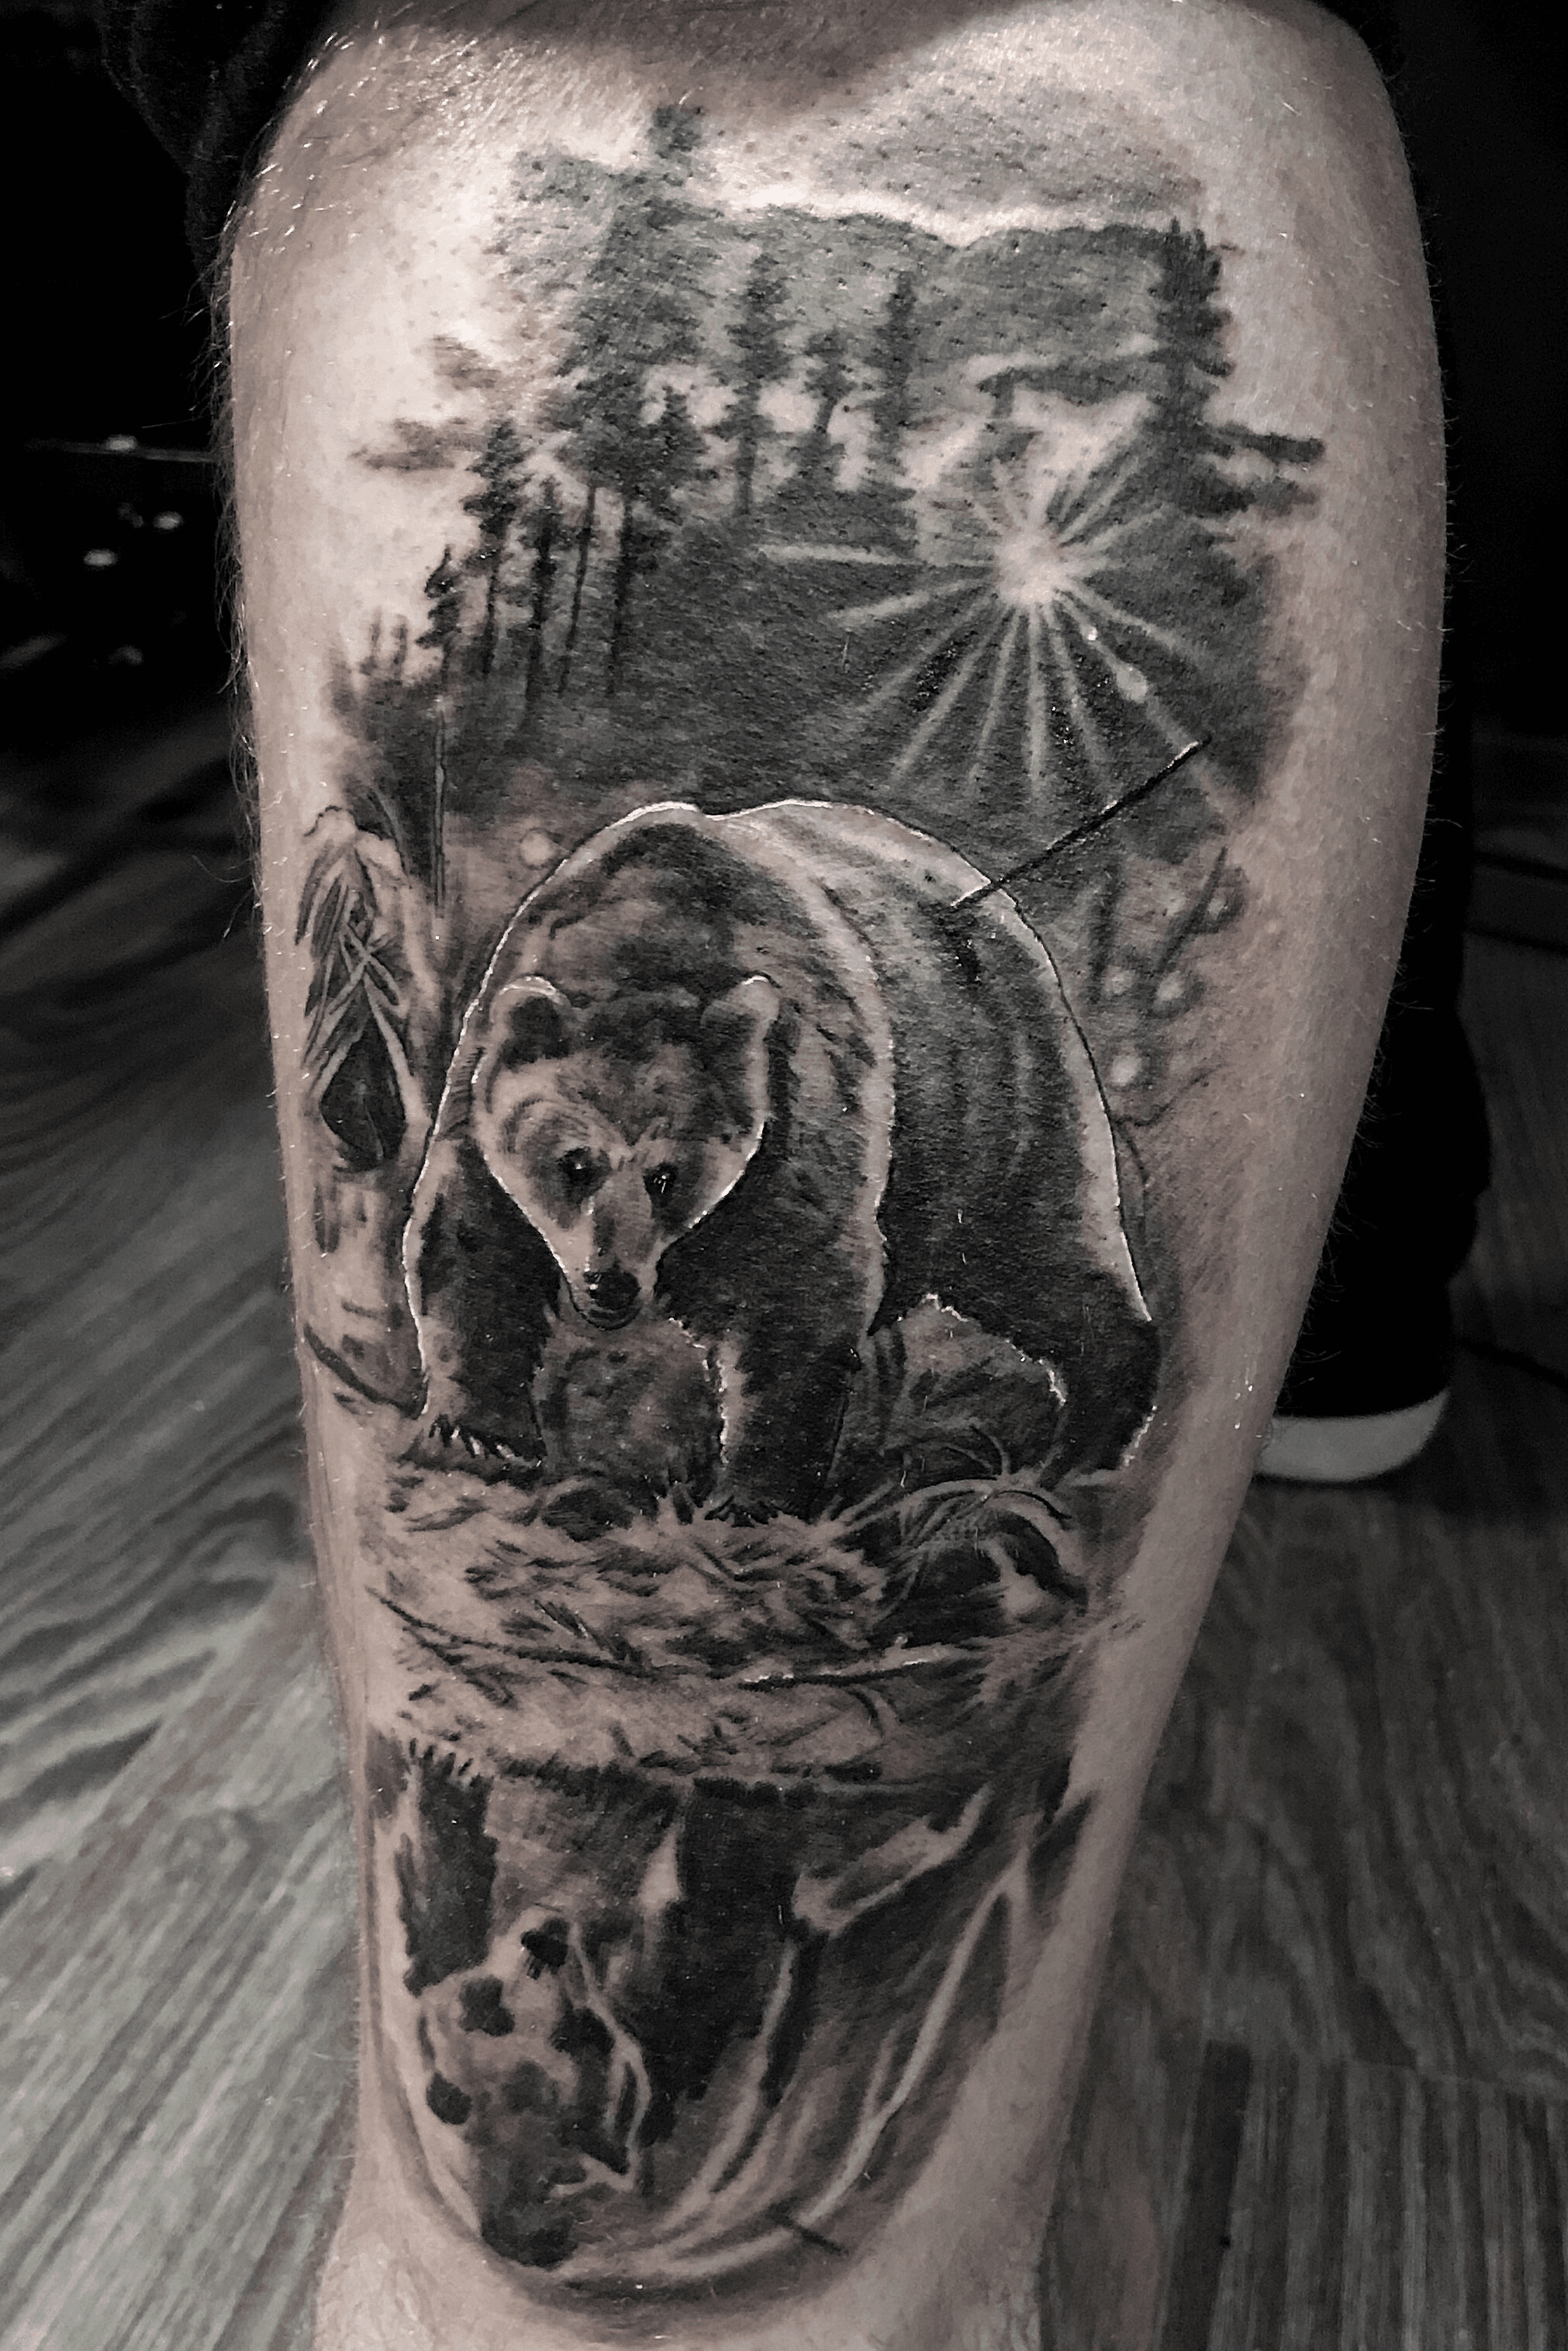 Bear Tattoos Meanings Tattoo Designs  Ideas